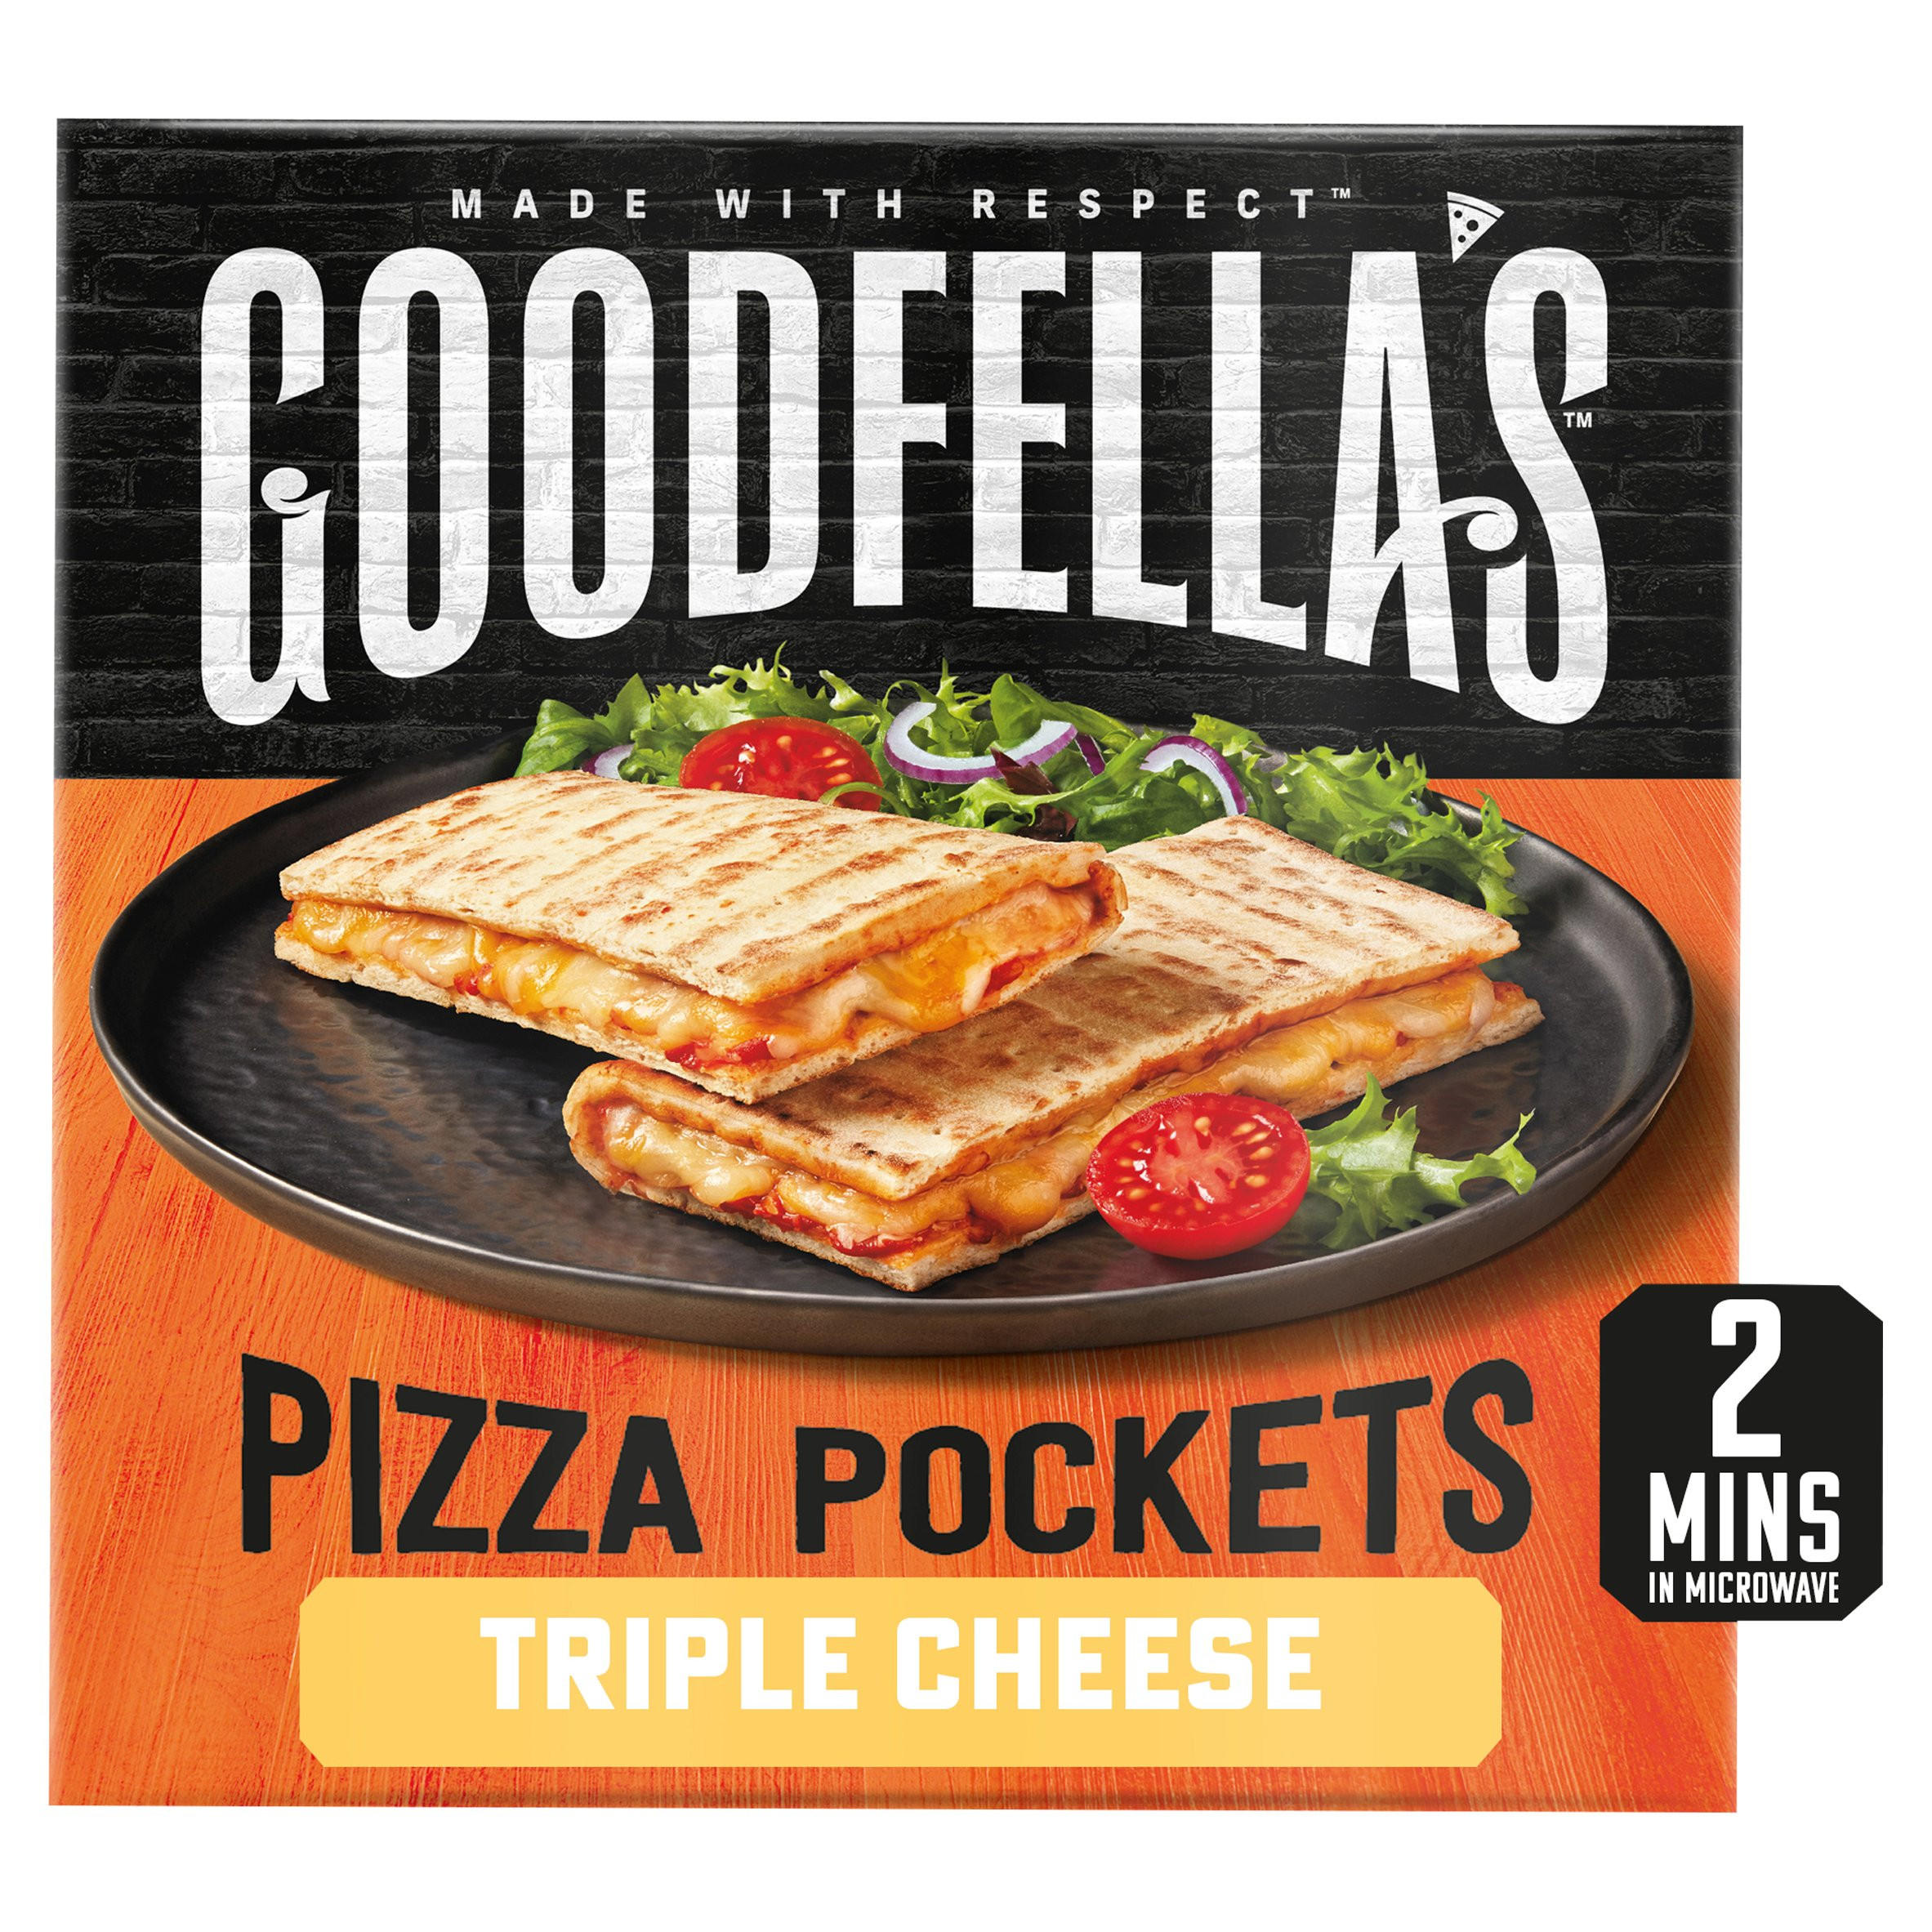 Goodfella's 2 Pizza Pockets Triple Cheese 250g